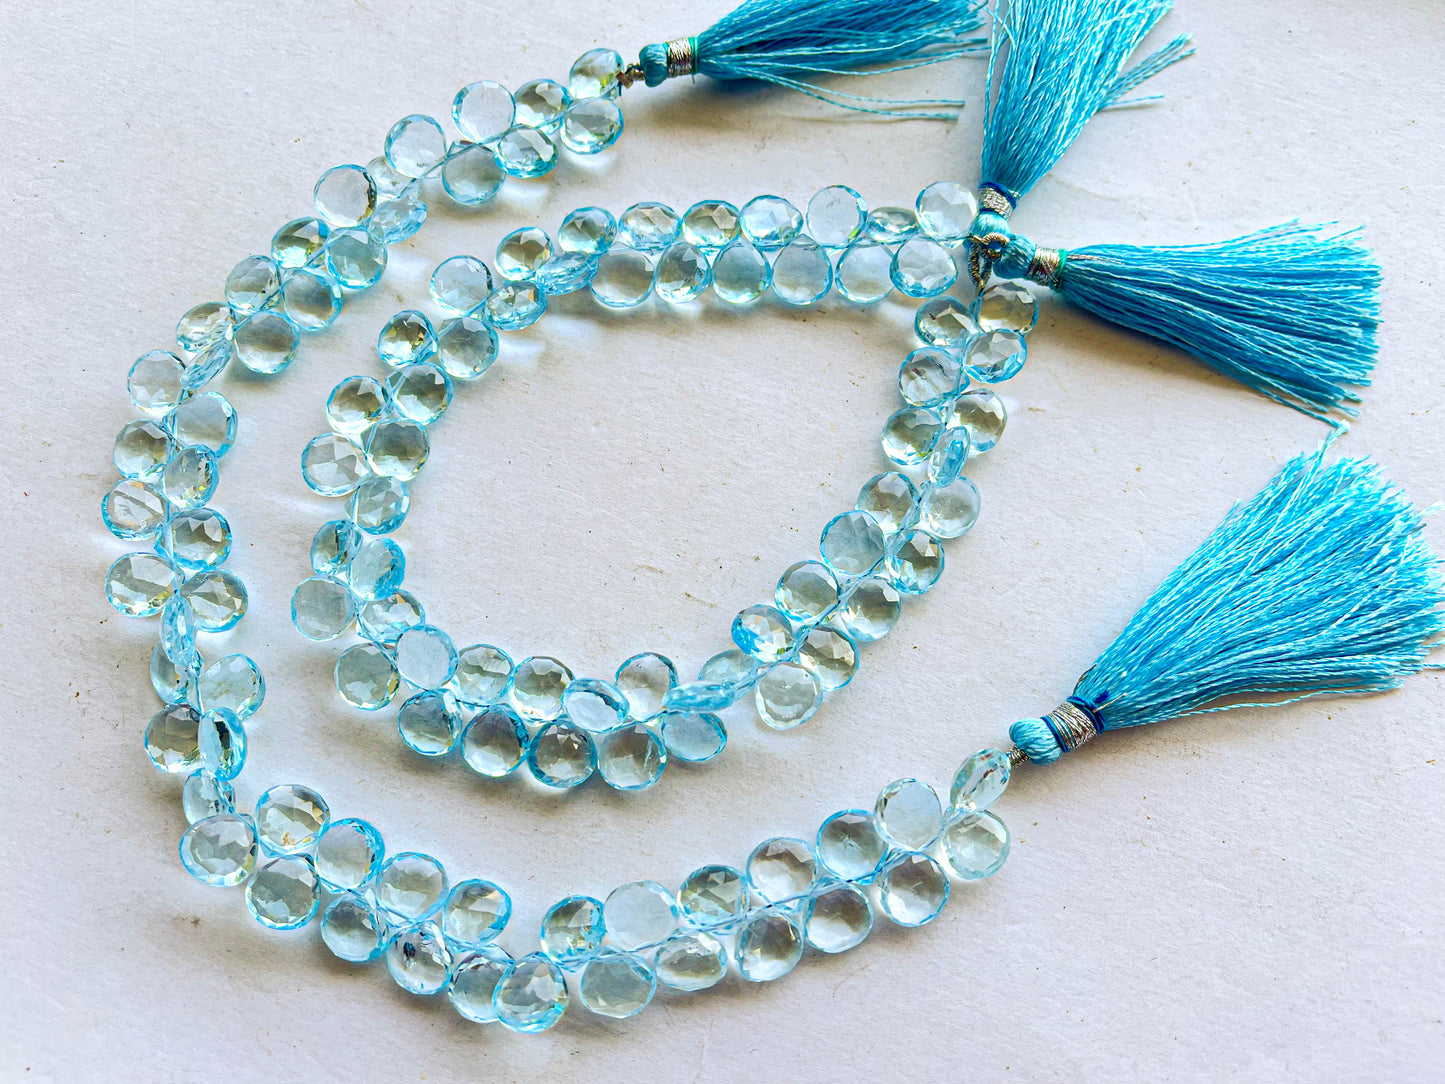 Blue Topaz Heart Shape Faceted Briolette Beads Beadsforyourjewelry